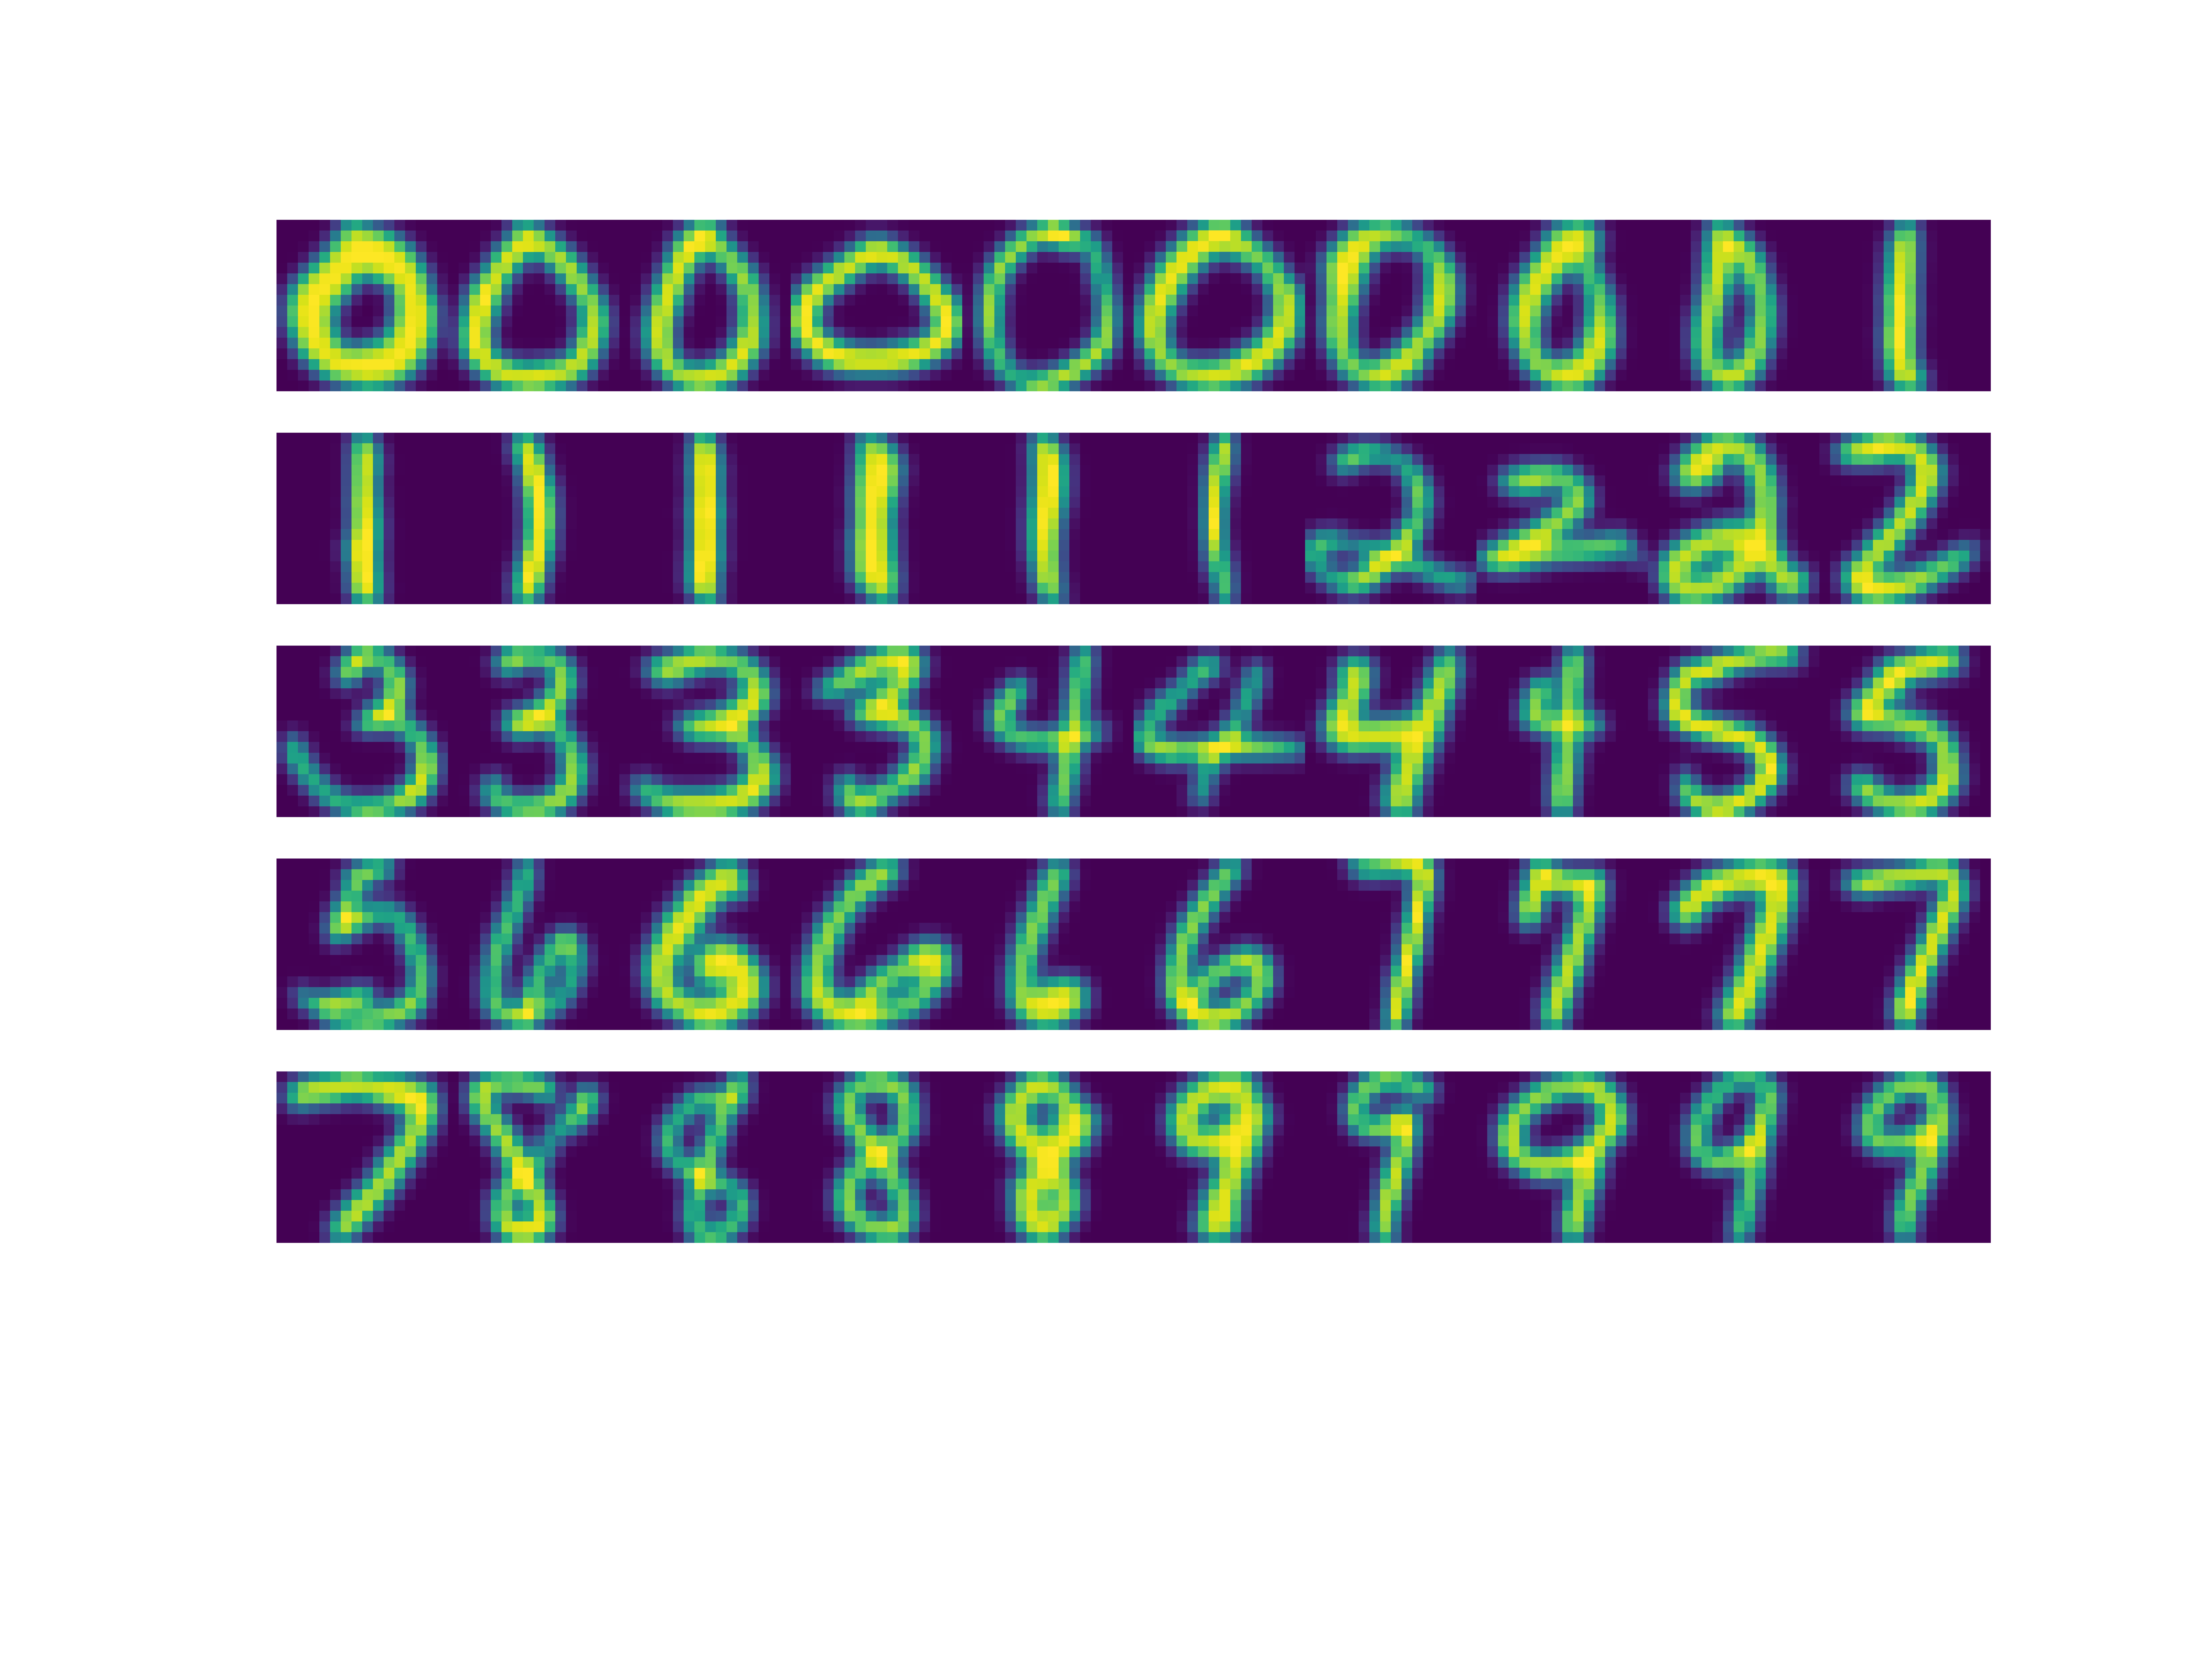 Prototypes for a handwritten digits dataset.